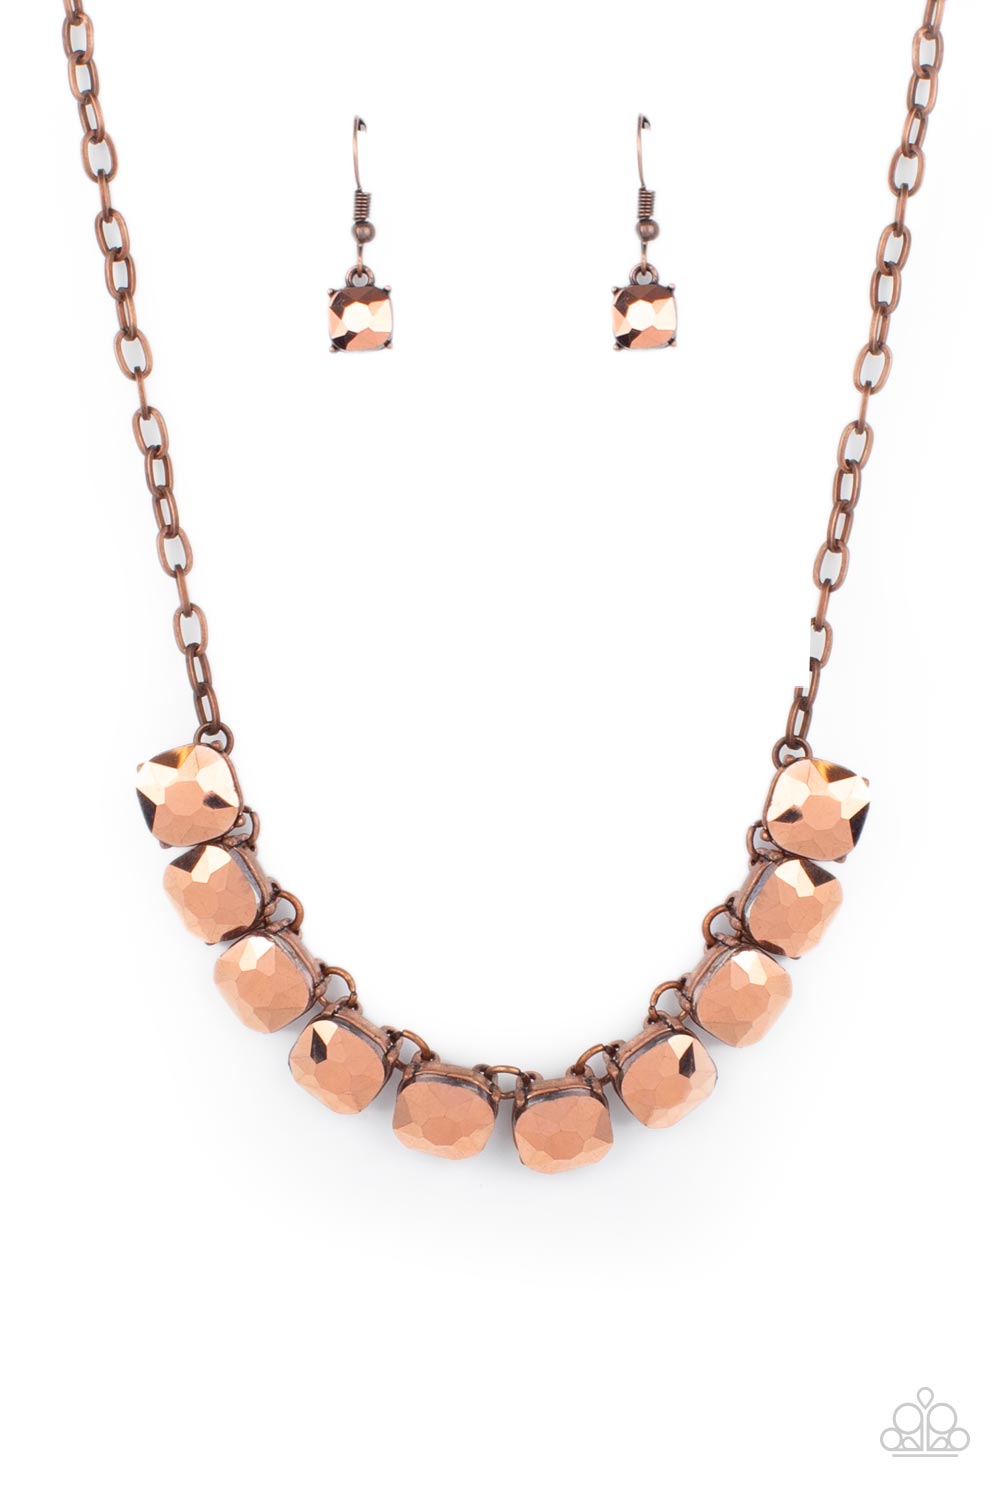 Radiance Squared - Copper (Aurum) Necklace freeshipping - JewLz4u Gemstone Gallery